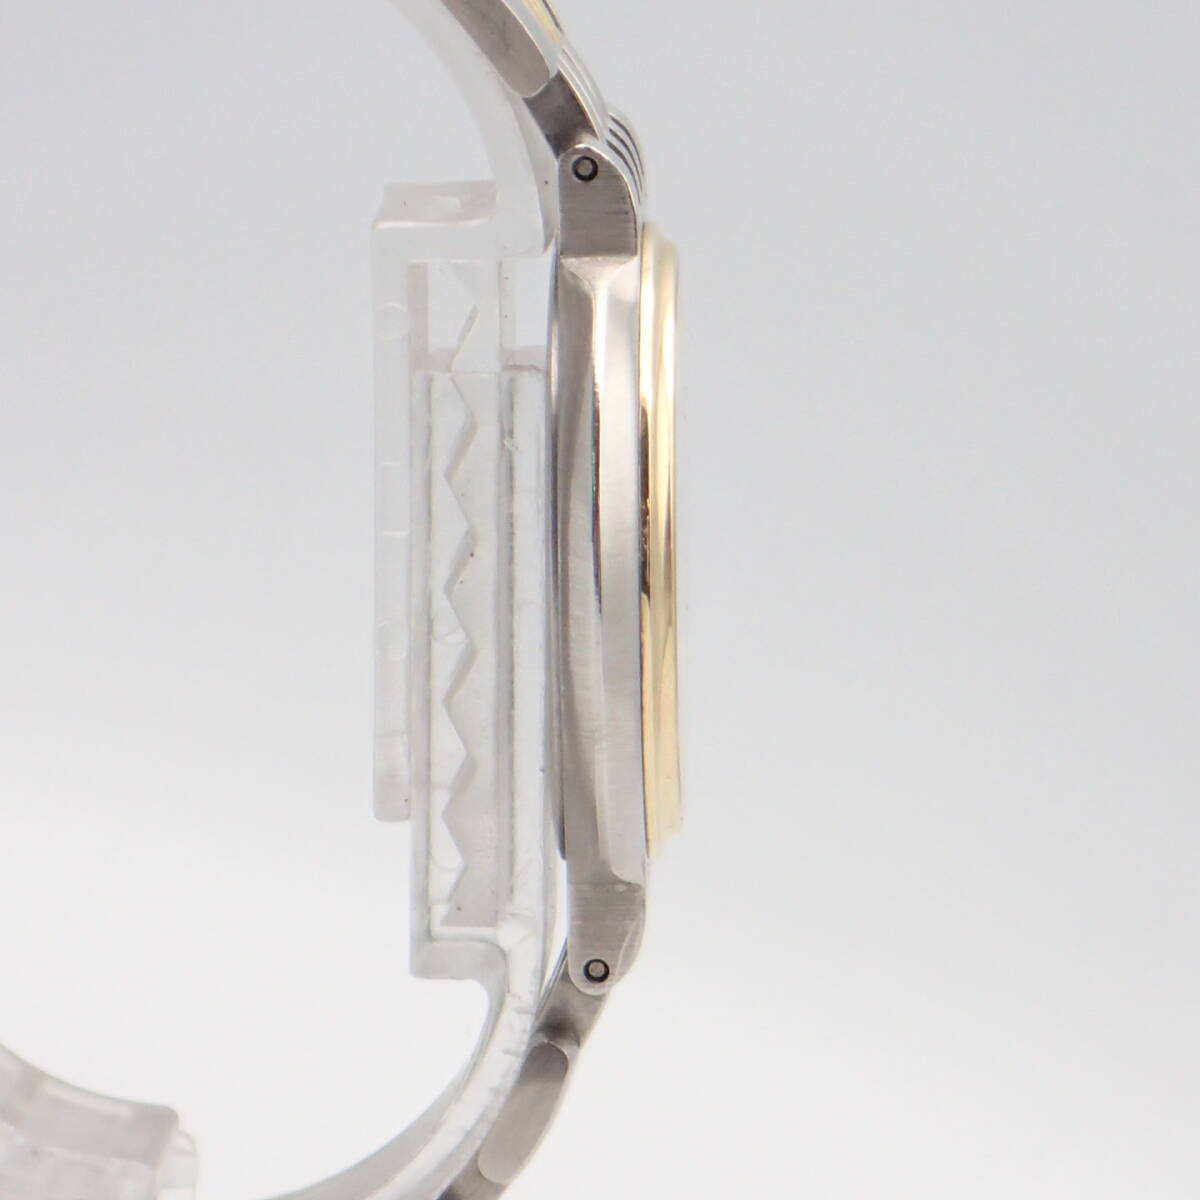 e05039/dunhill Dunhill / Elite / кварц / мужские наручные часы / комбинированный / Rome n/ циферблат белый 